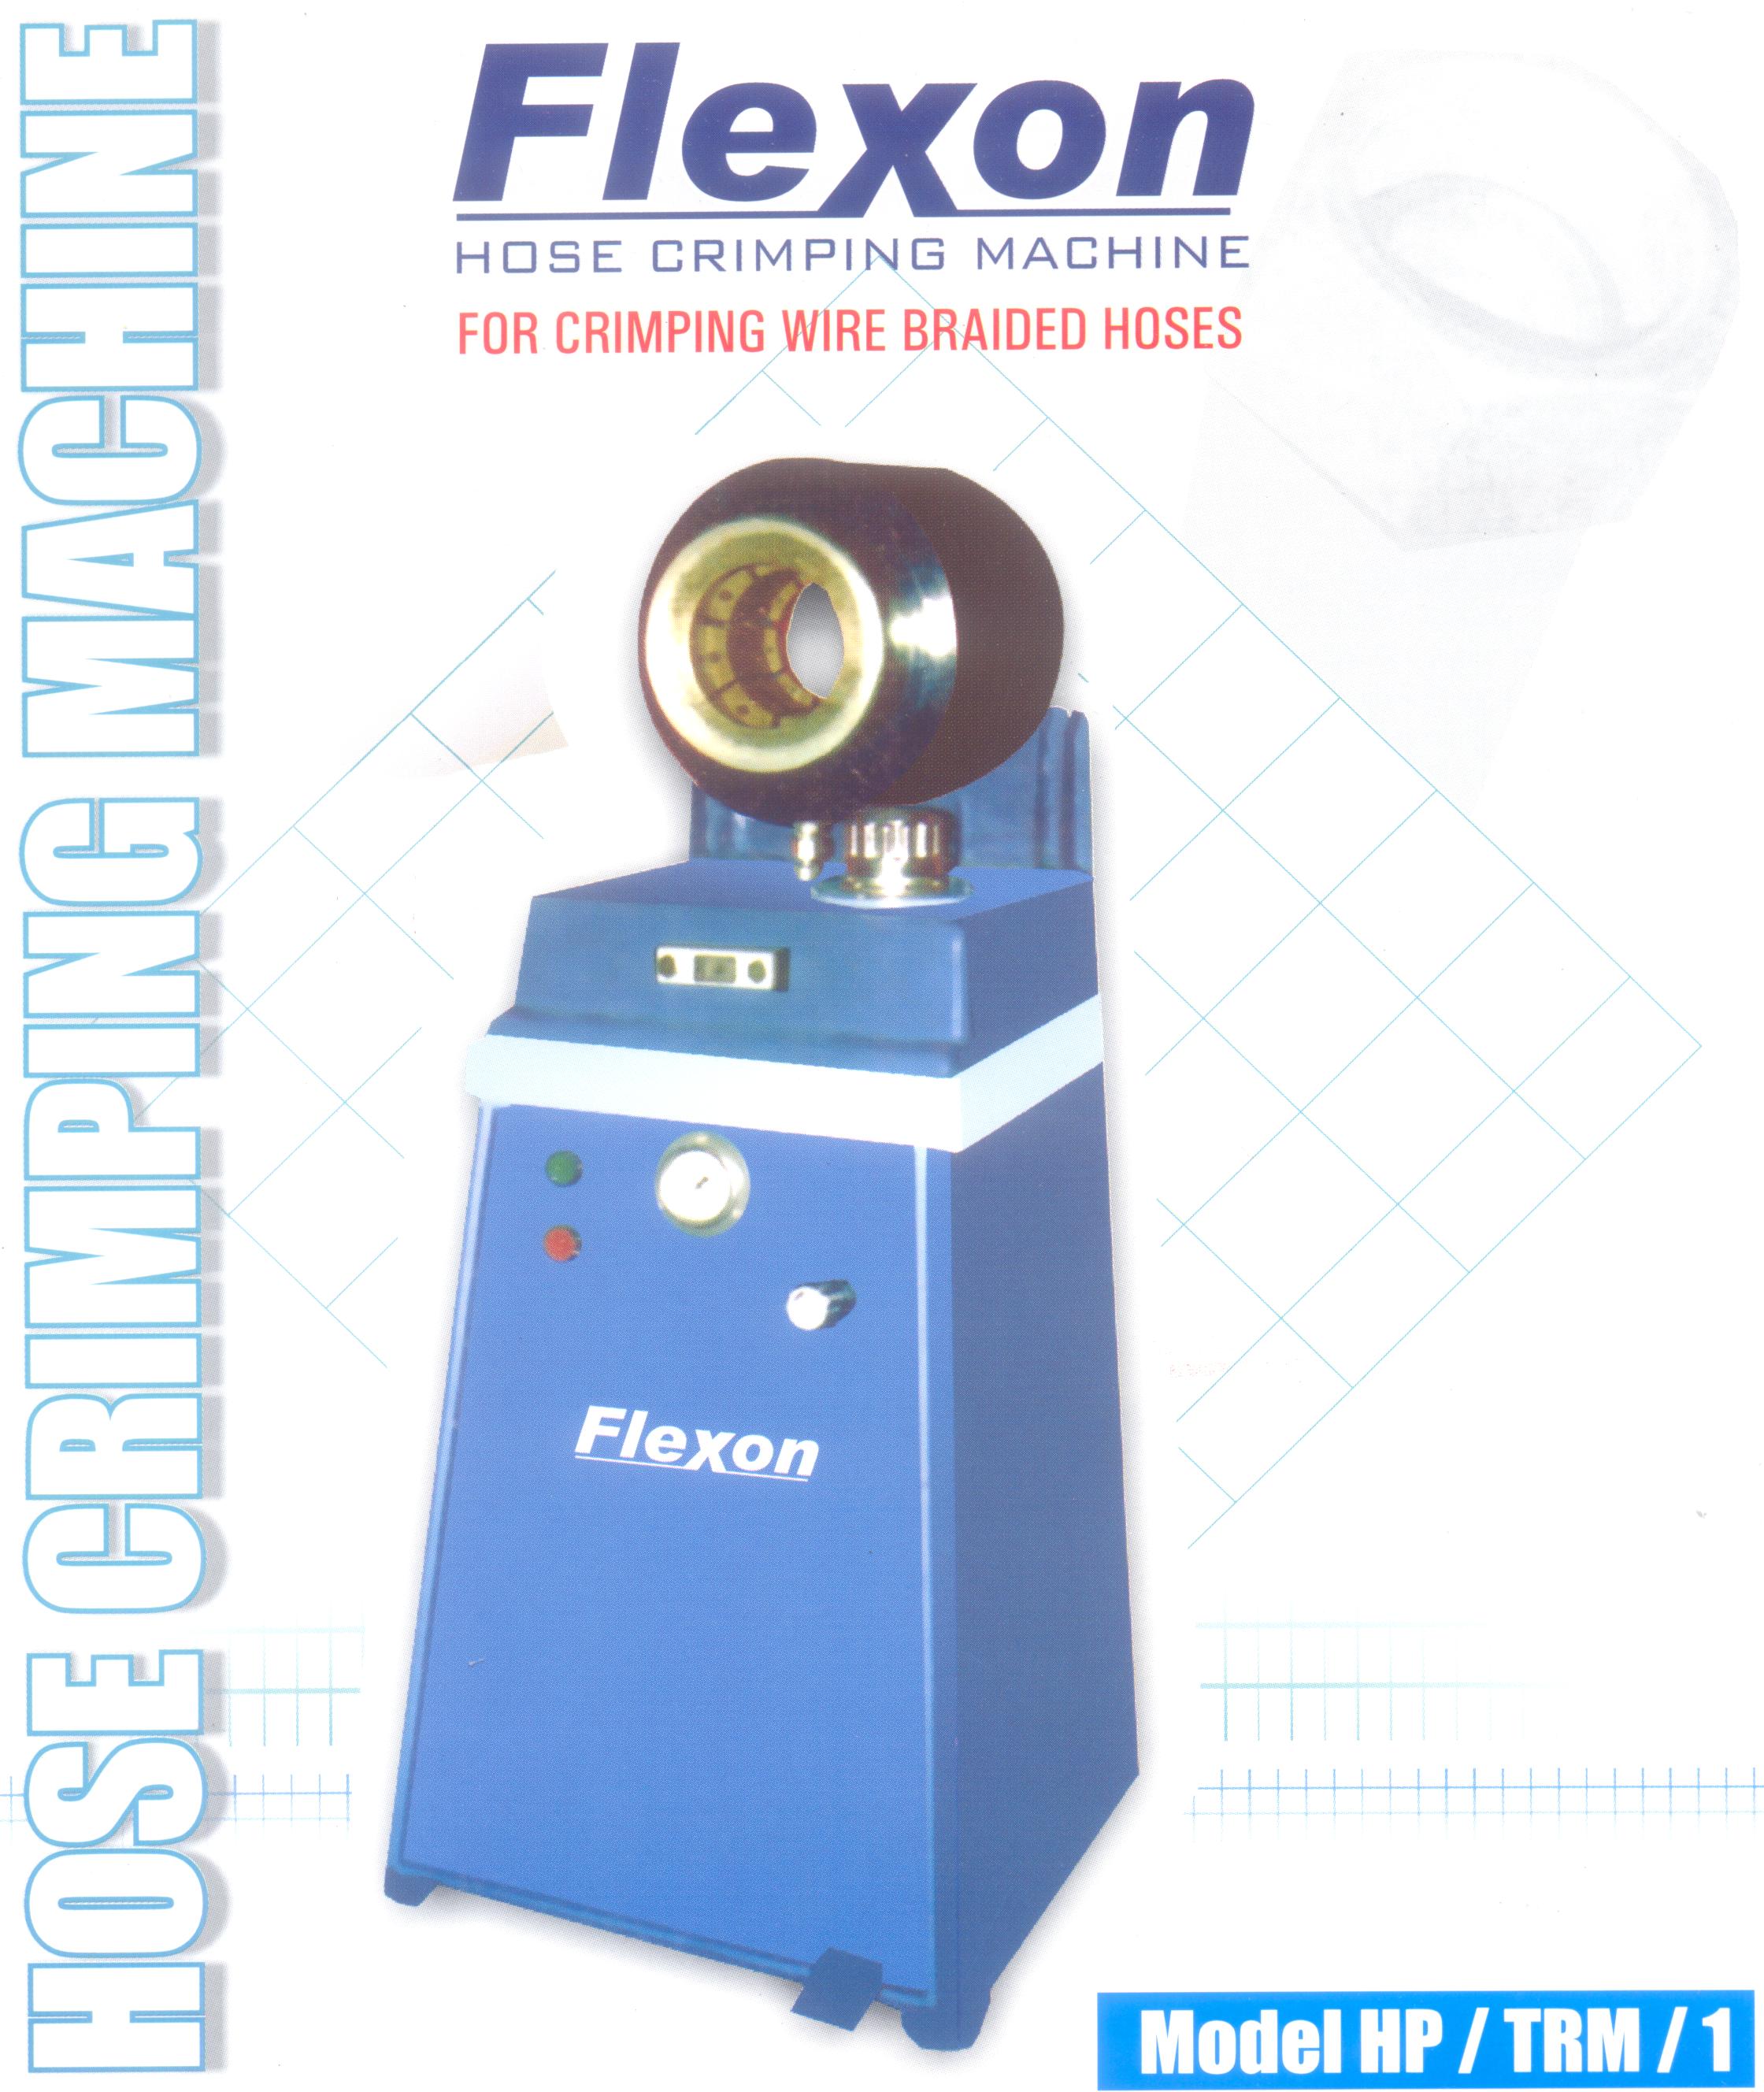 Flexon Make Hose Crimping Machine Manufacturer Supplier Wholesale Exporter Importer Buyer Trader Retailer in New Delhi Delhi India